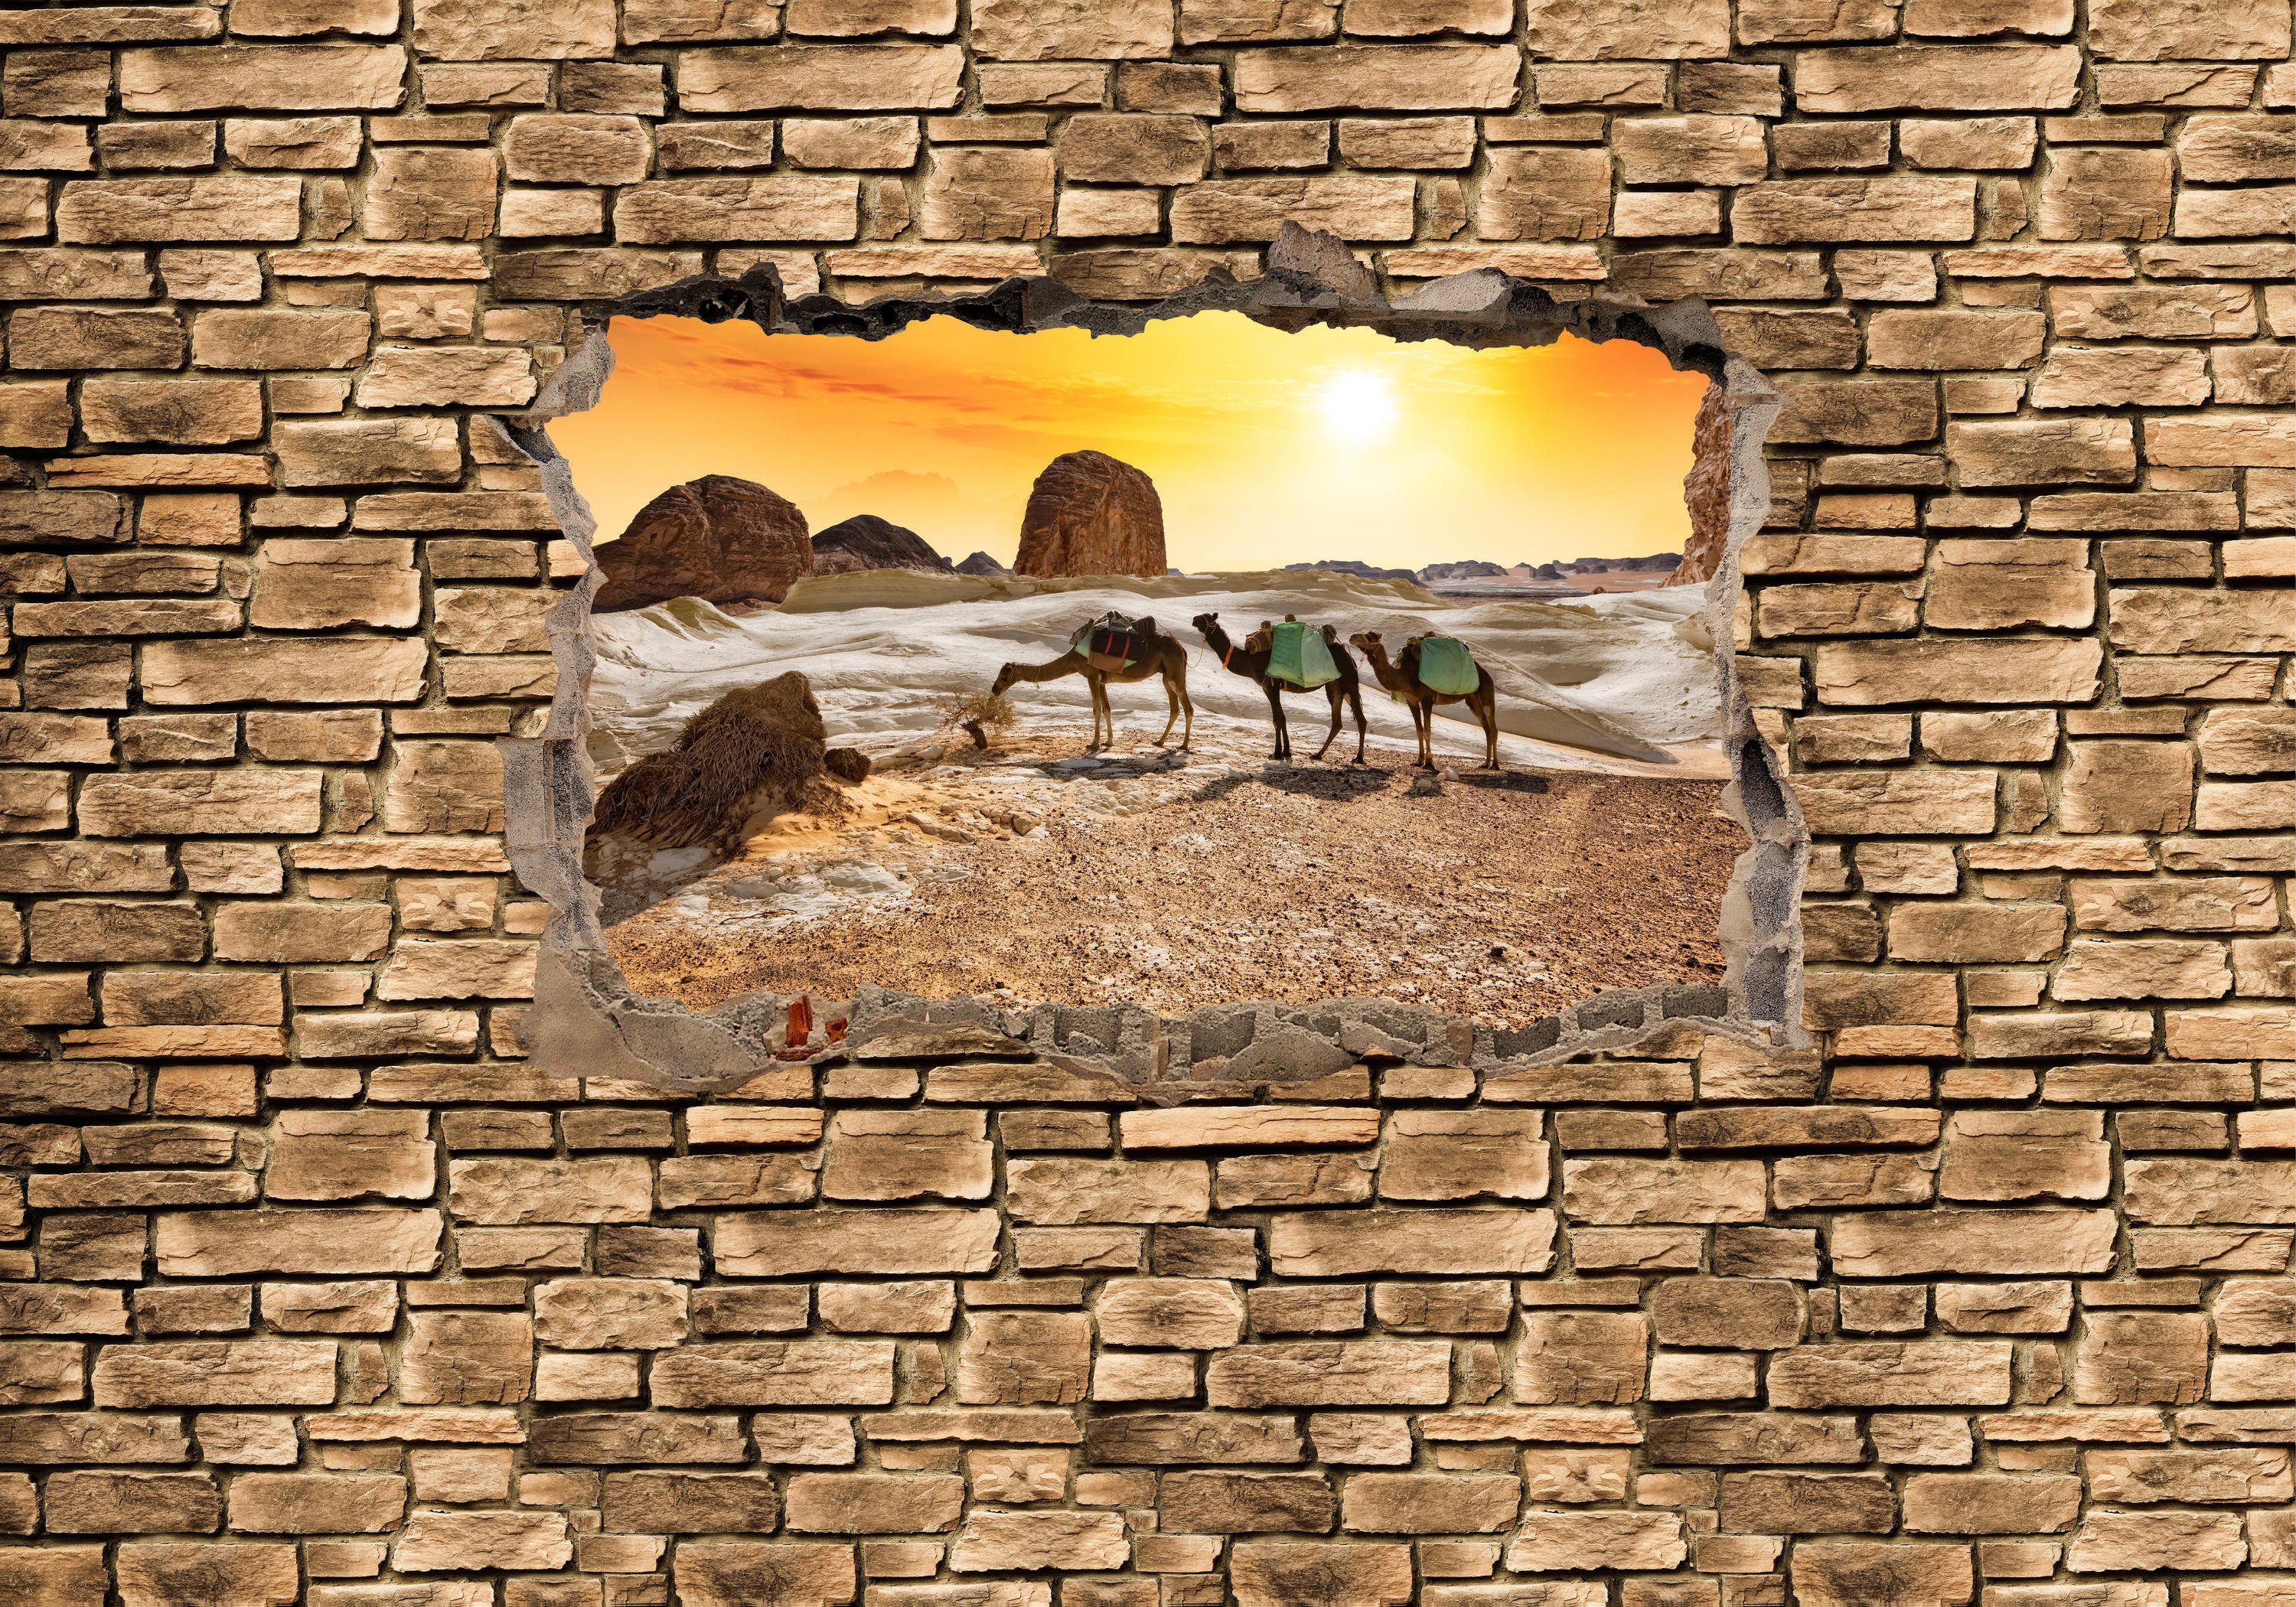 matt, wandmotiv24 3D glatt, Wüste Fototapete - Kamele Steinmauer, Vliestapete Wandtapete, der Motivtapete, in